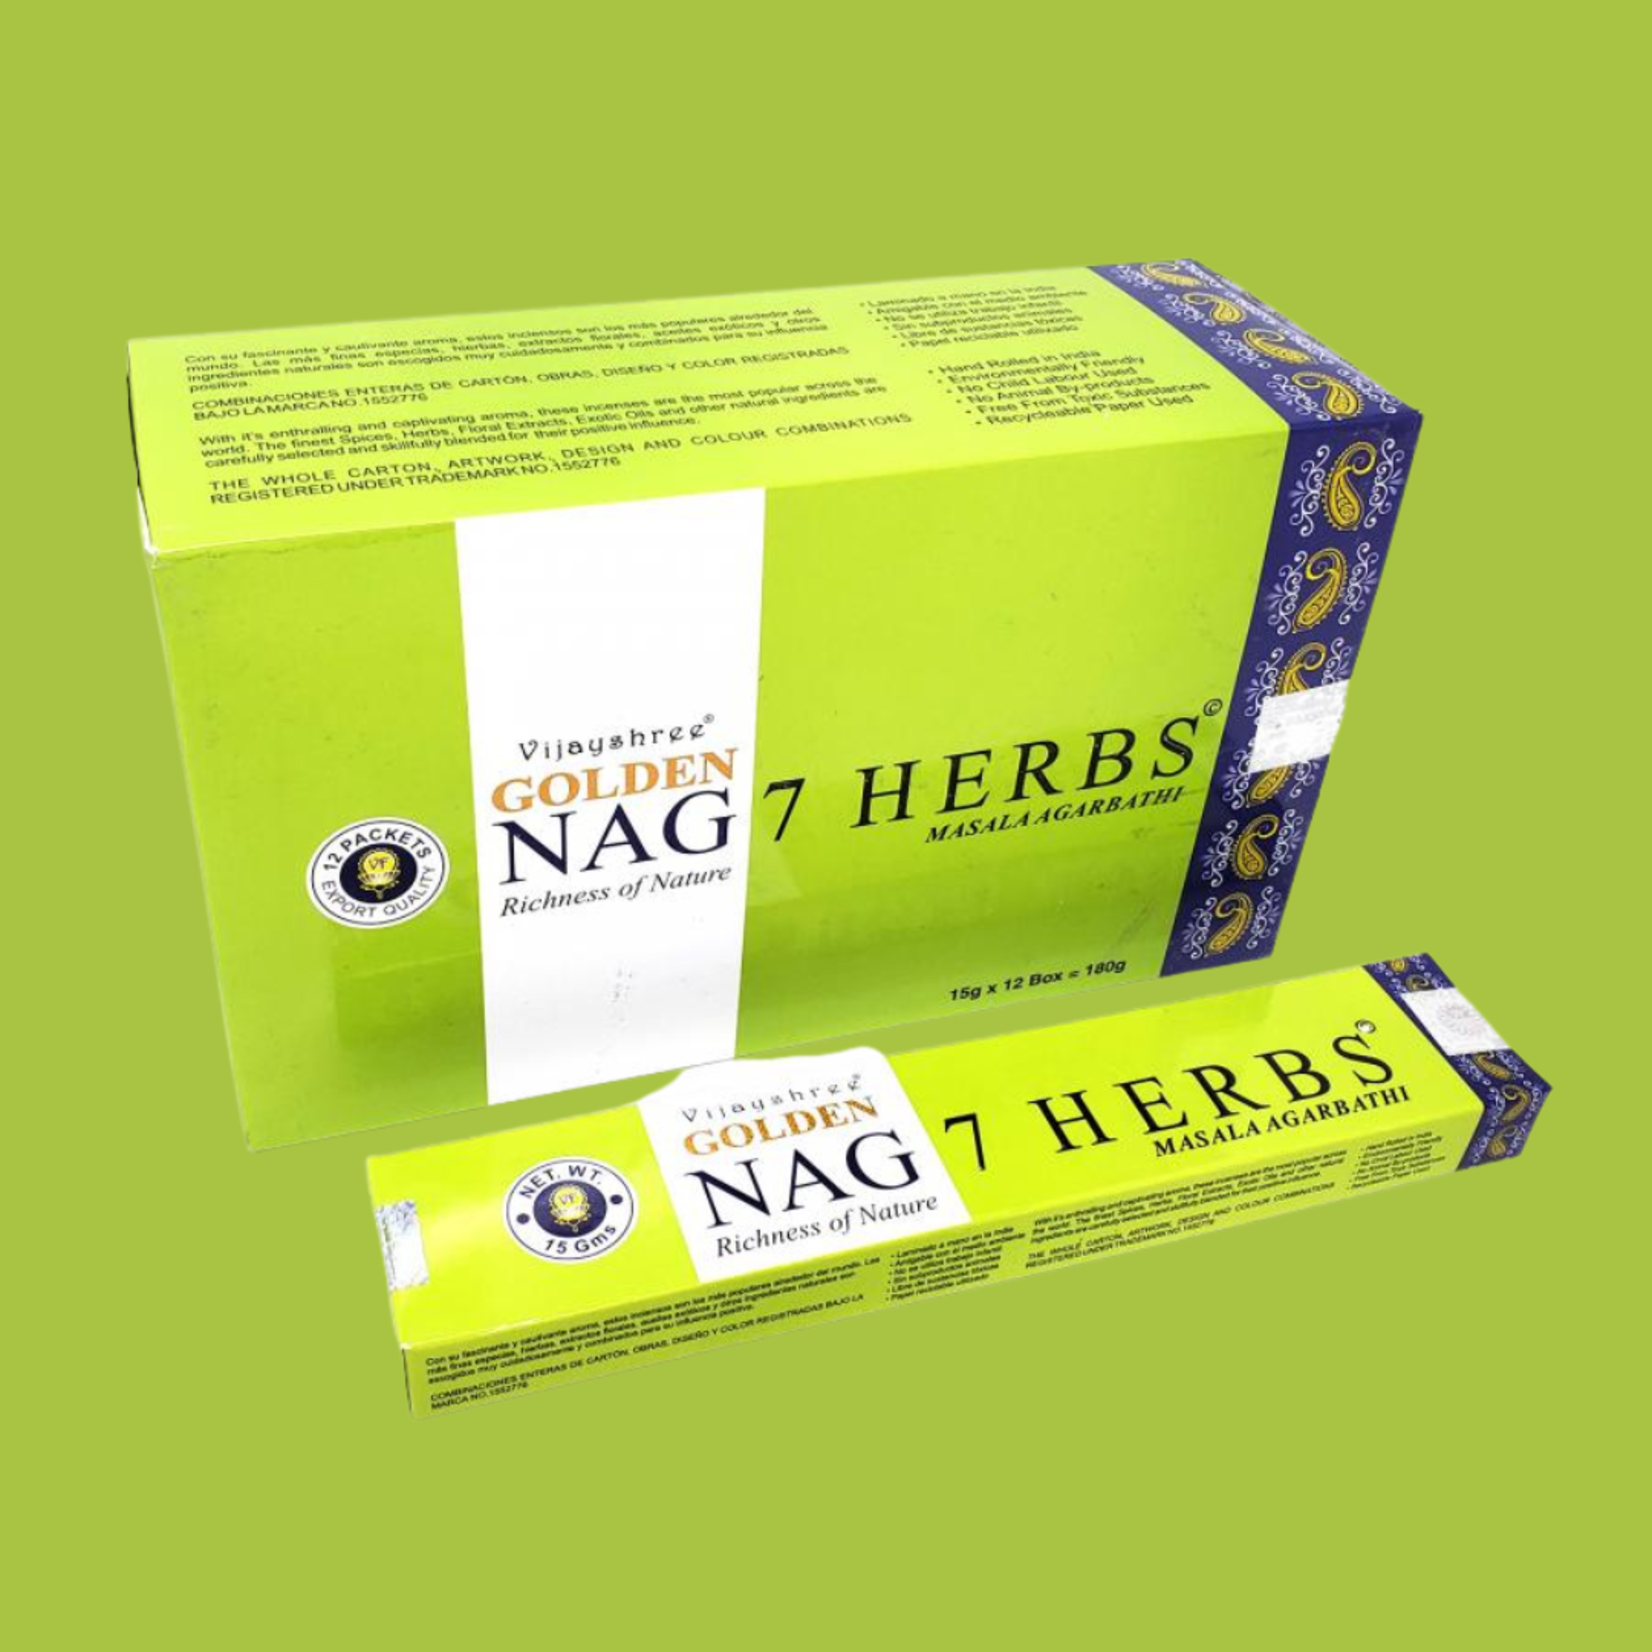 Golden Nag Incense 15g Box - 7 Herbs